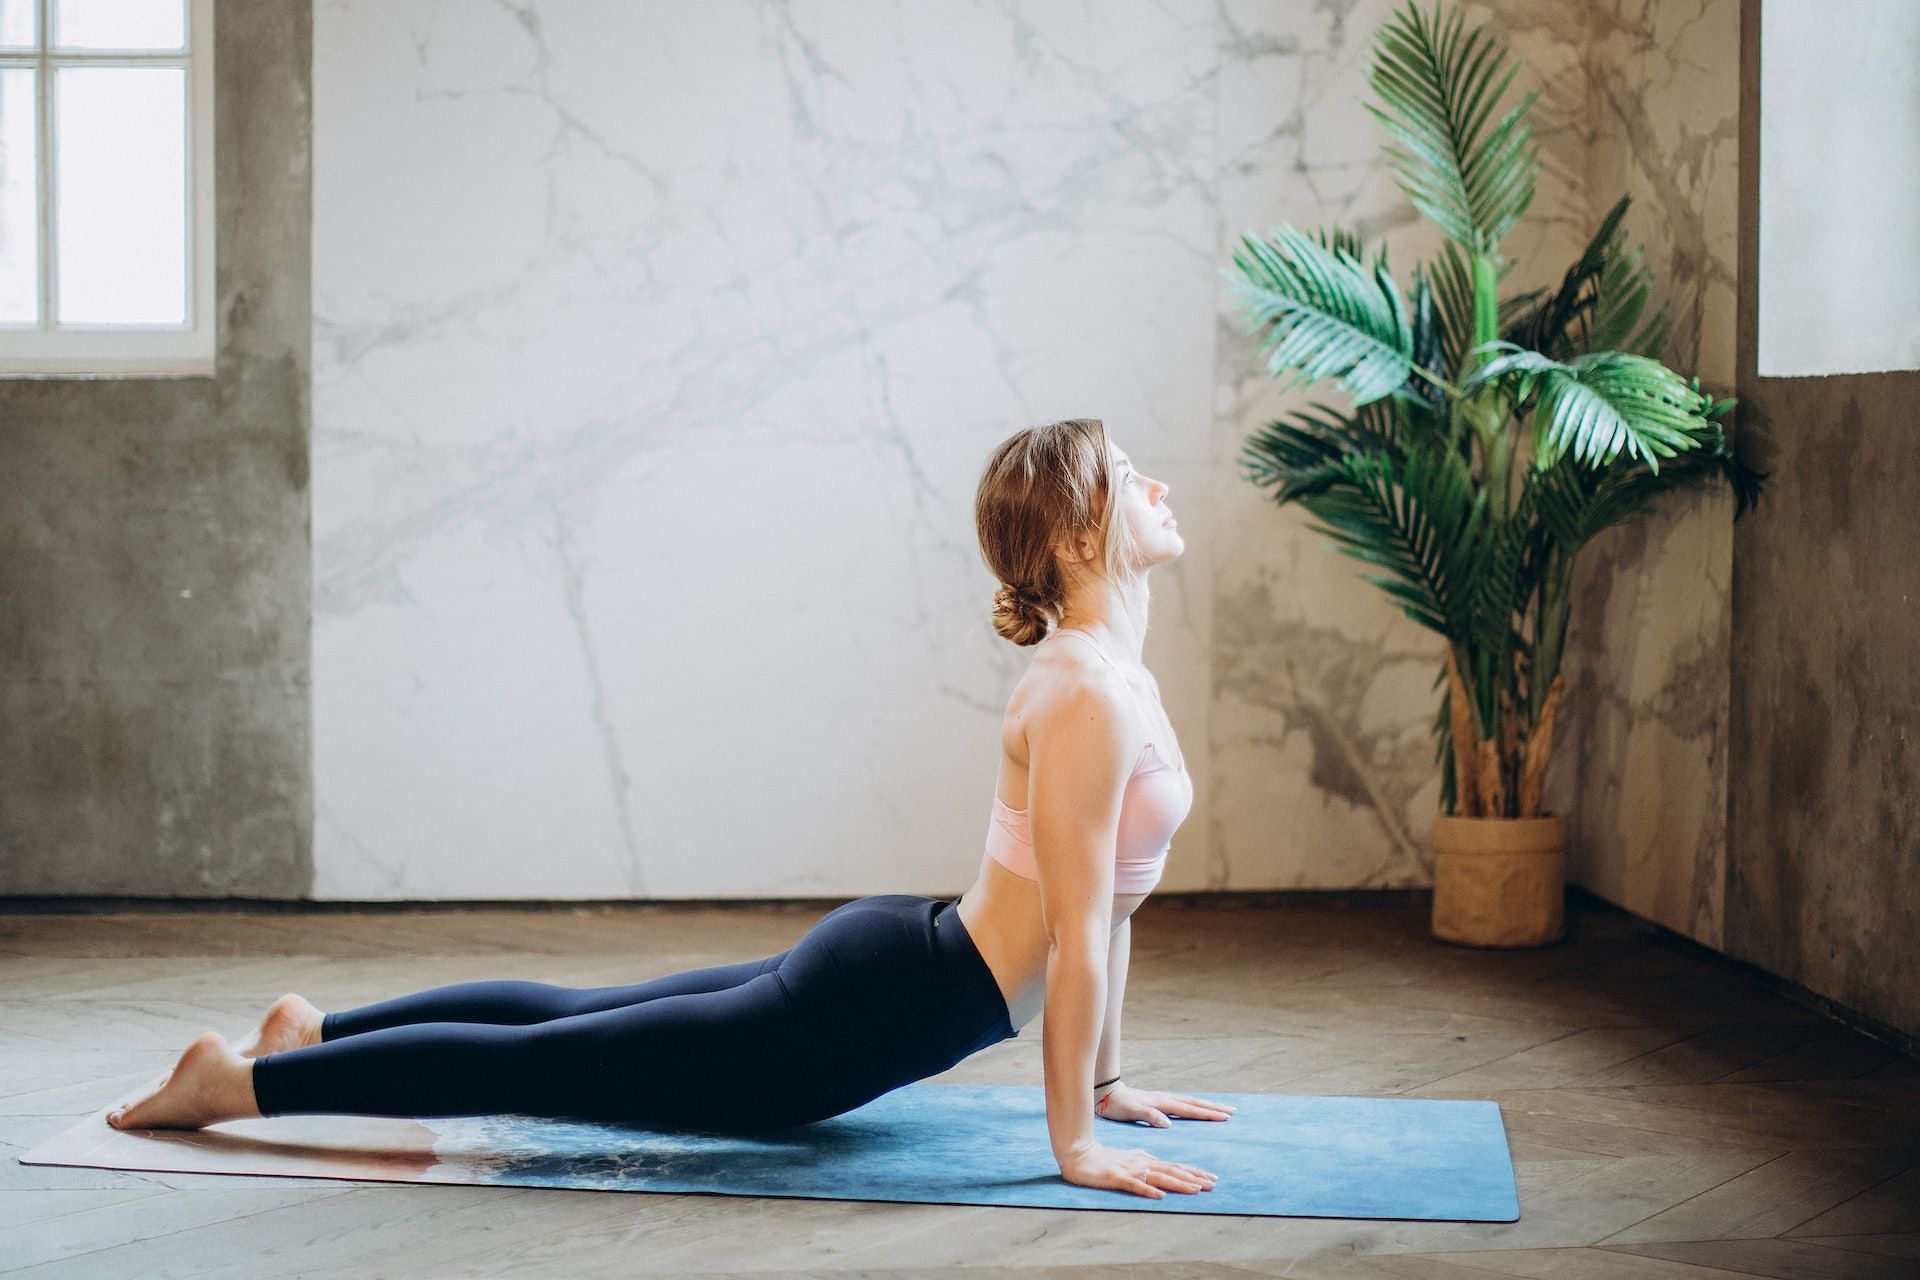 Strength building yoga poses offer great full-body benefits. (Photo via Pexels/Elina Fairytale)